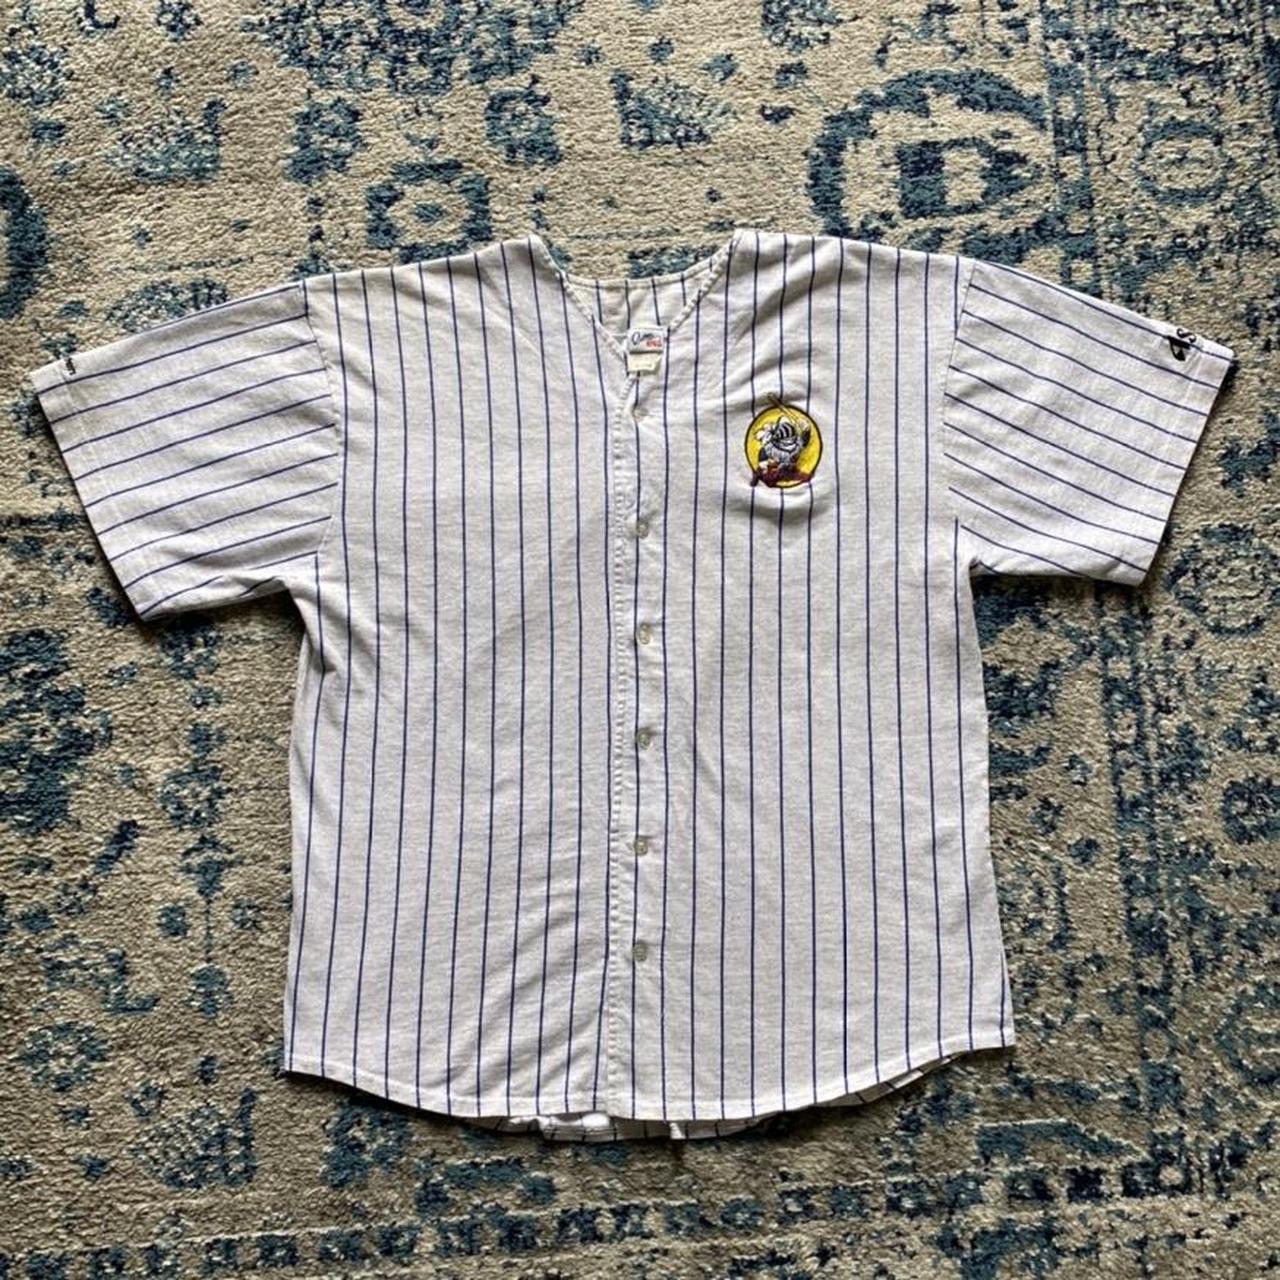 Vintage japanese baseball jersey